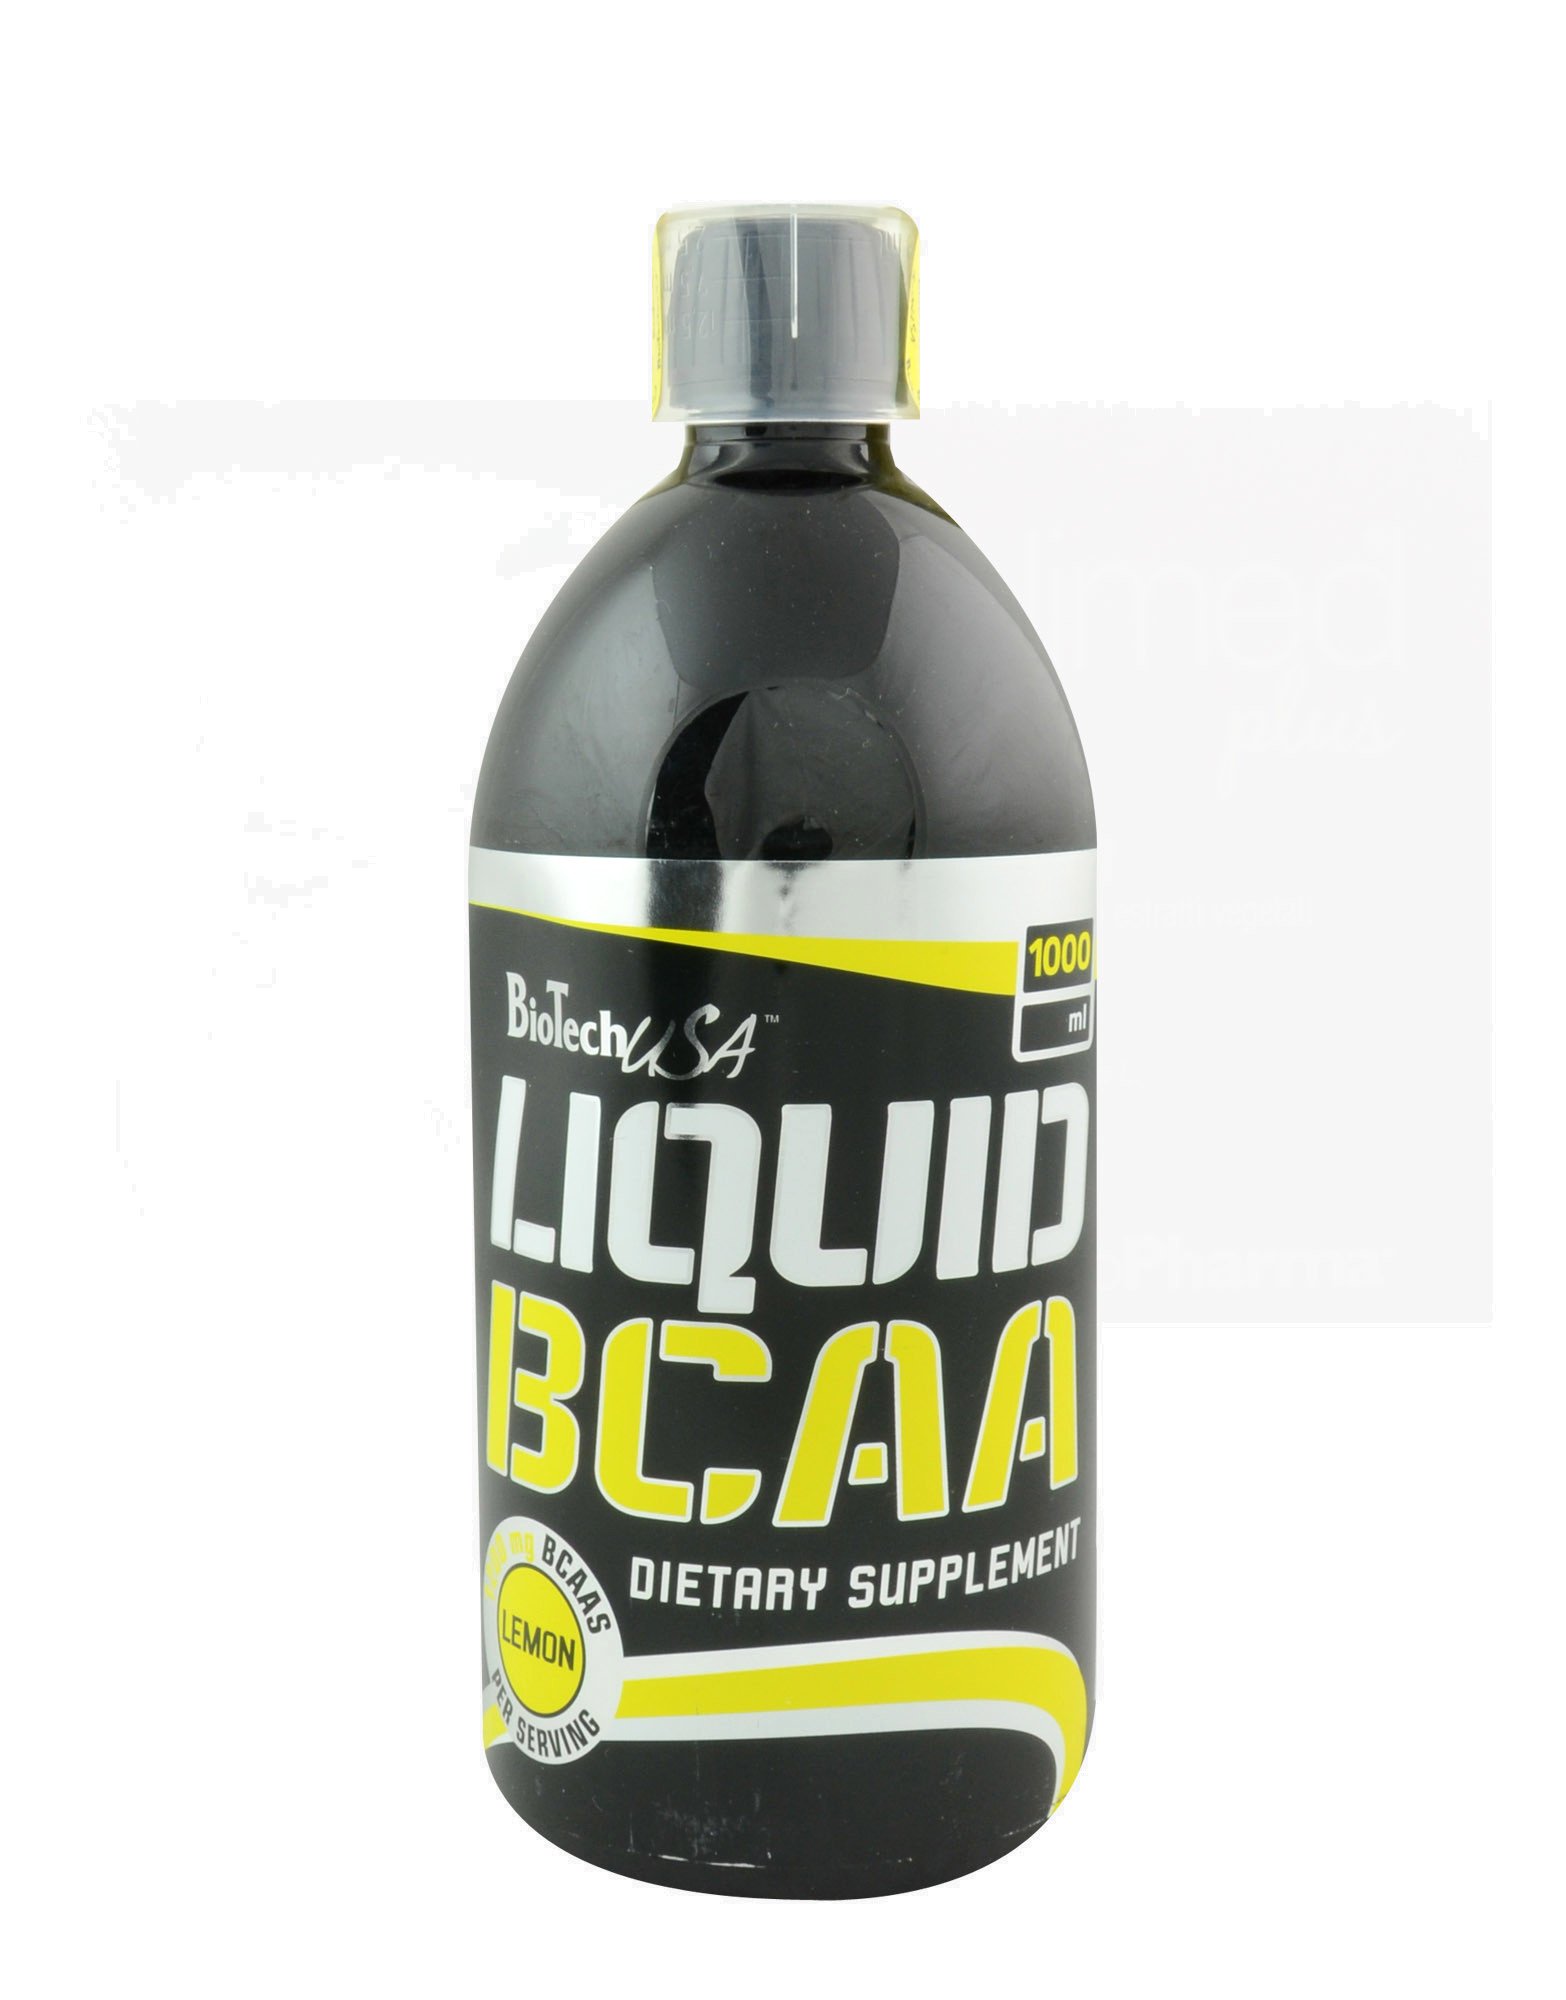 BioTech Liquid BСАА, , 1000 мл